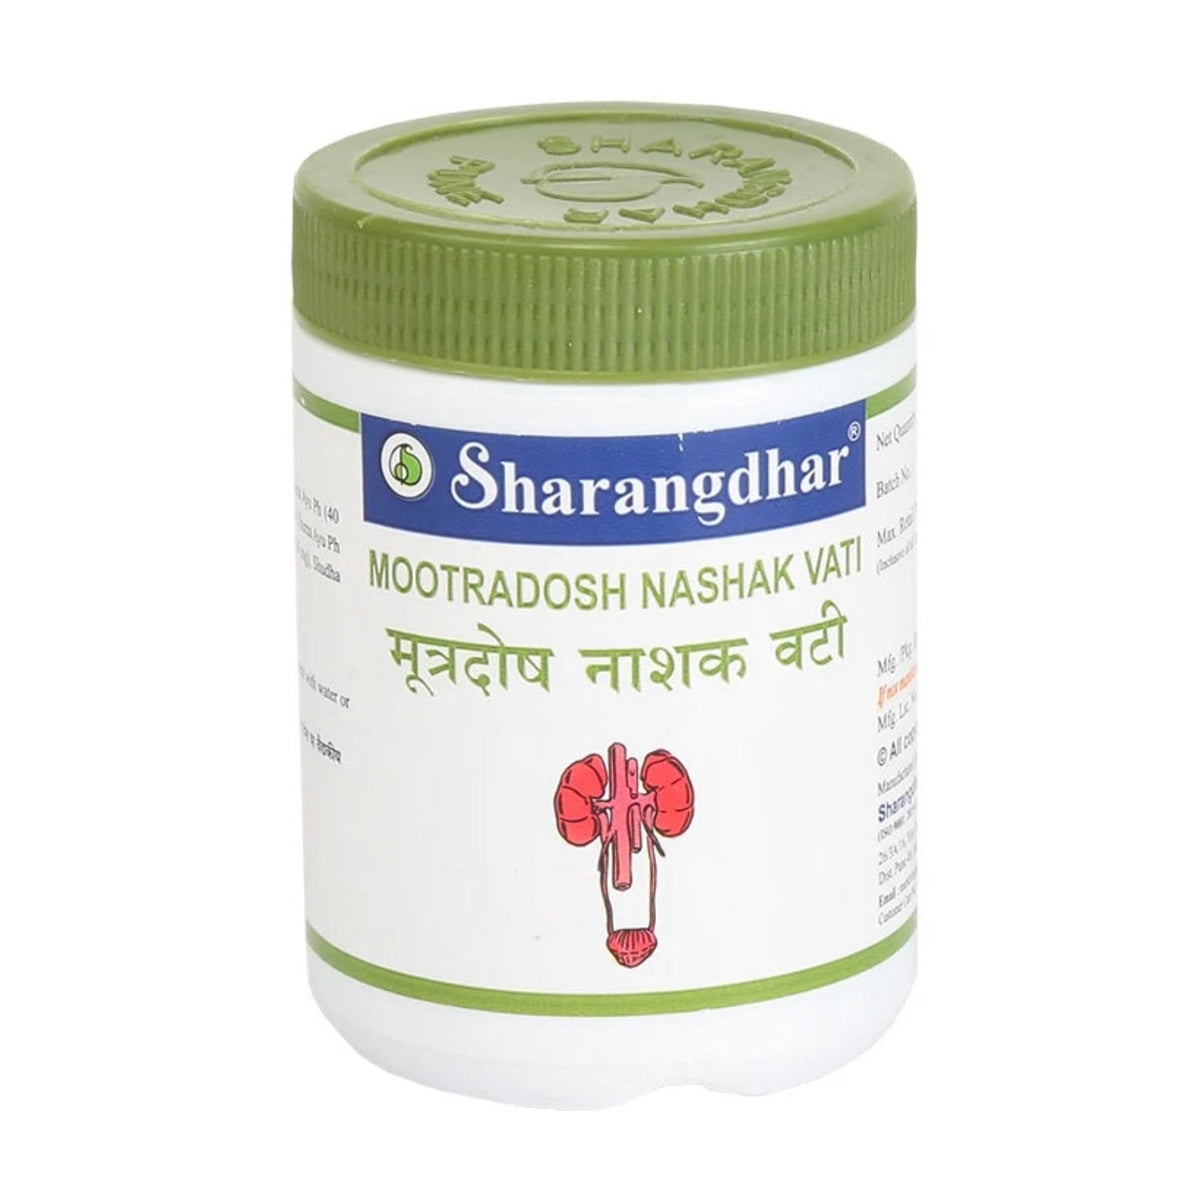 Sharangdhar Ayurvedic Mootradosh Nashak Vati Lösung für Urinprobleme